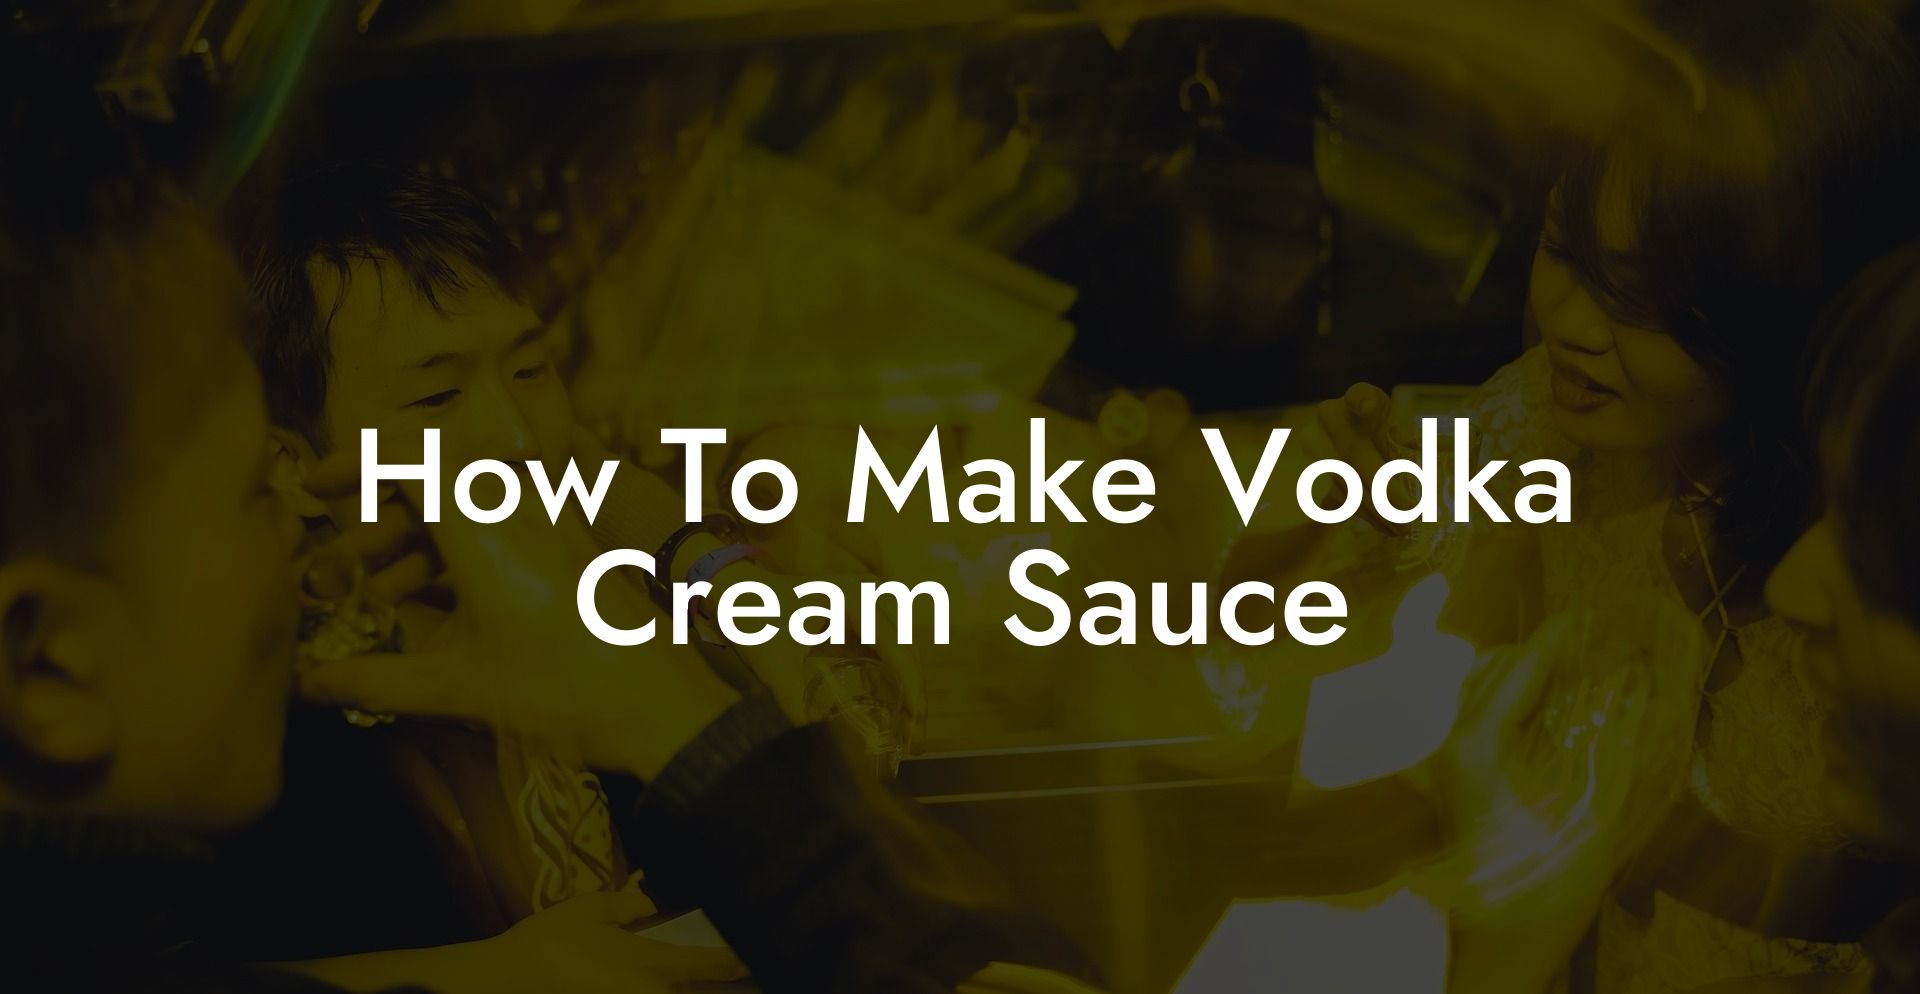 How To Make Vodka Cream Sauce